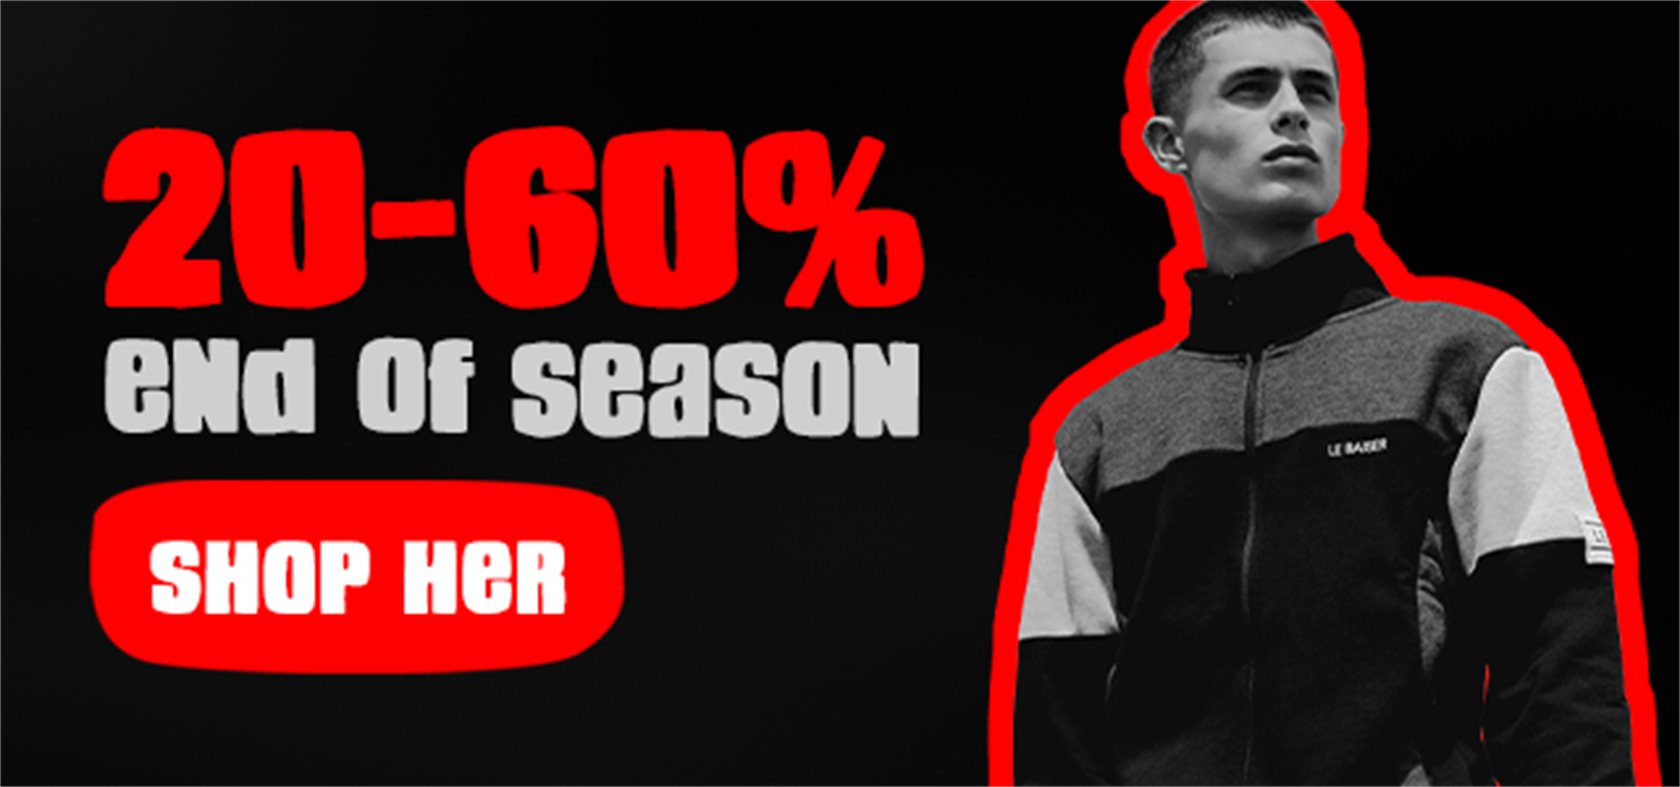 End of Season | Spar 20-60%